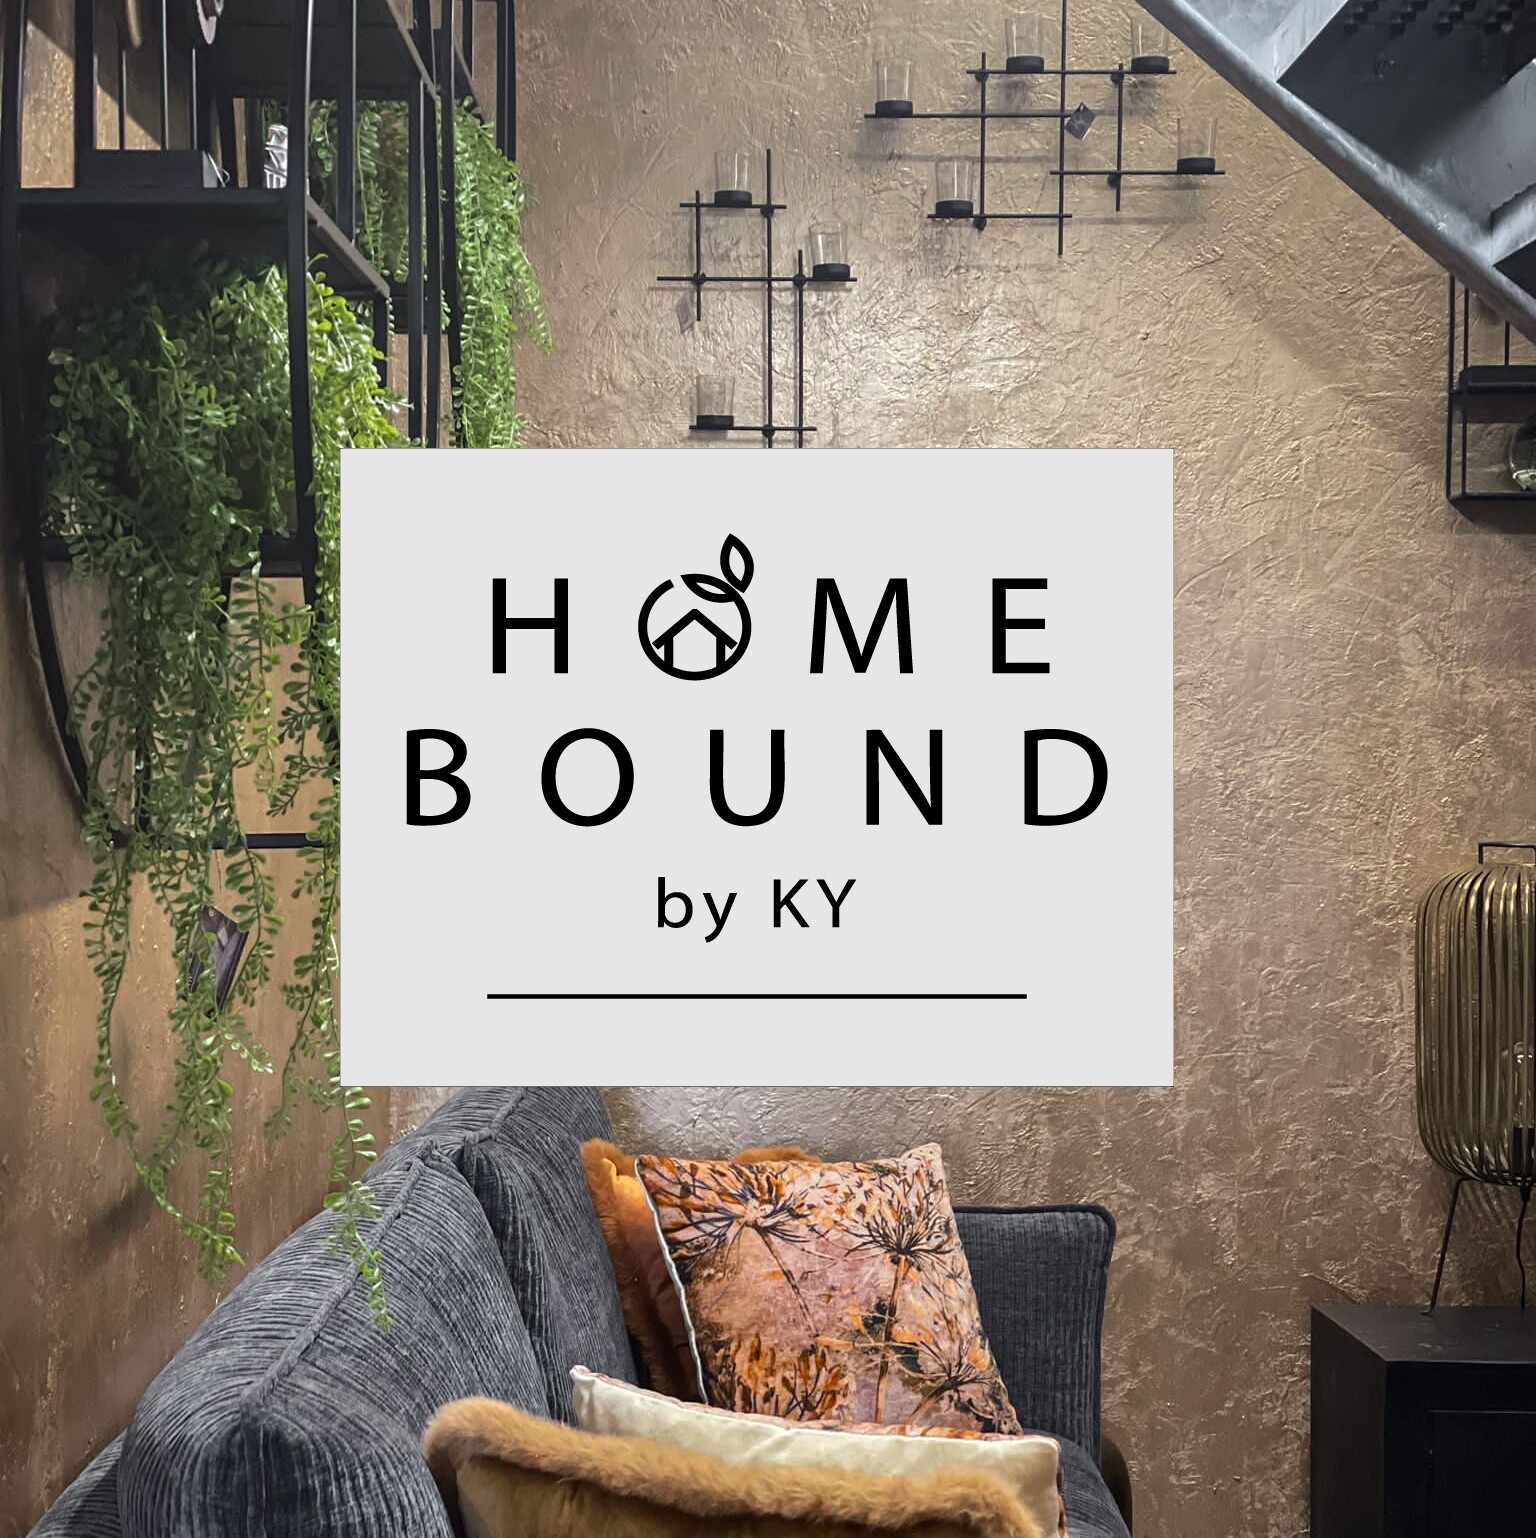  HomeBound by KY logo